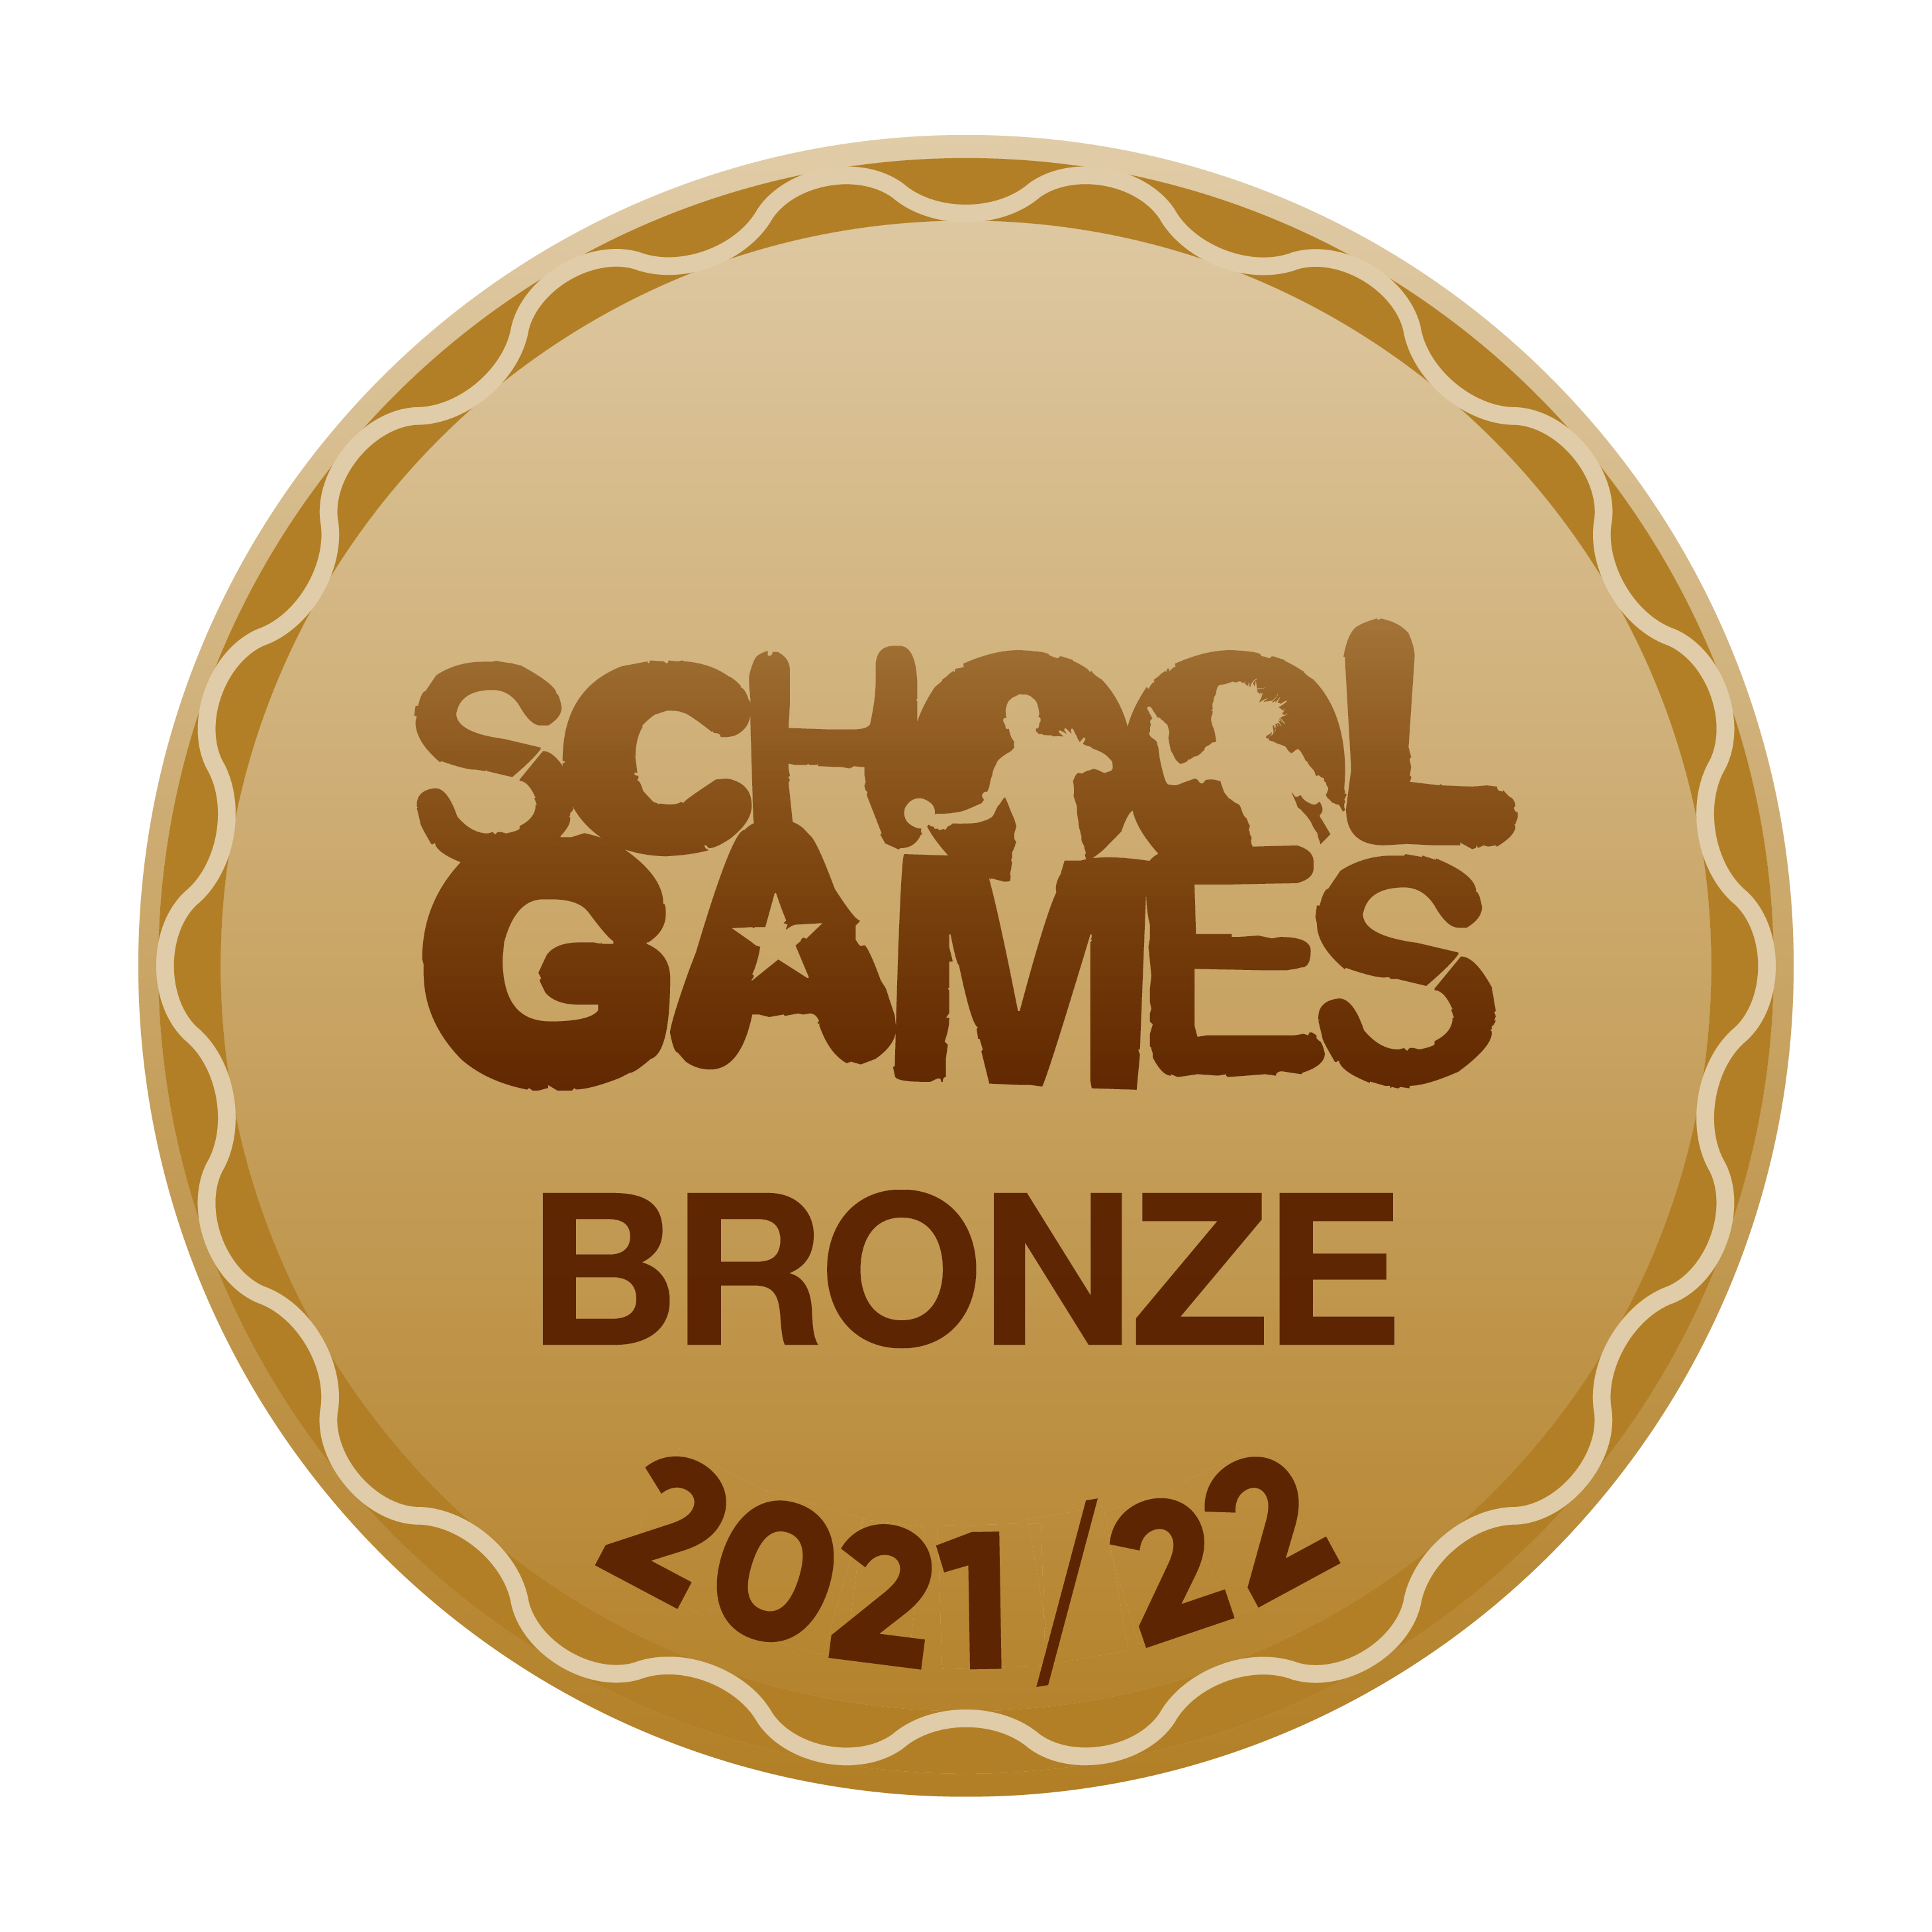 Woodlands Schools - Platinum School Games Award